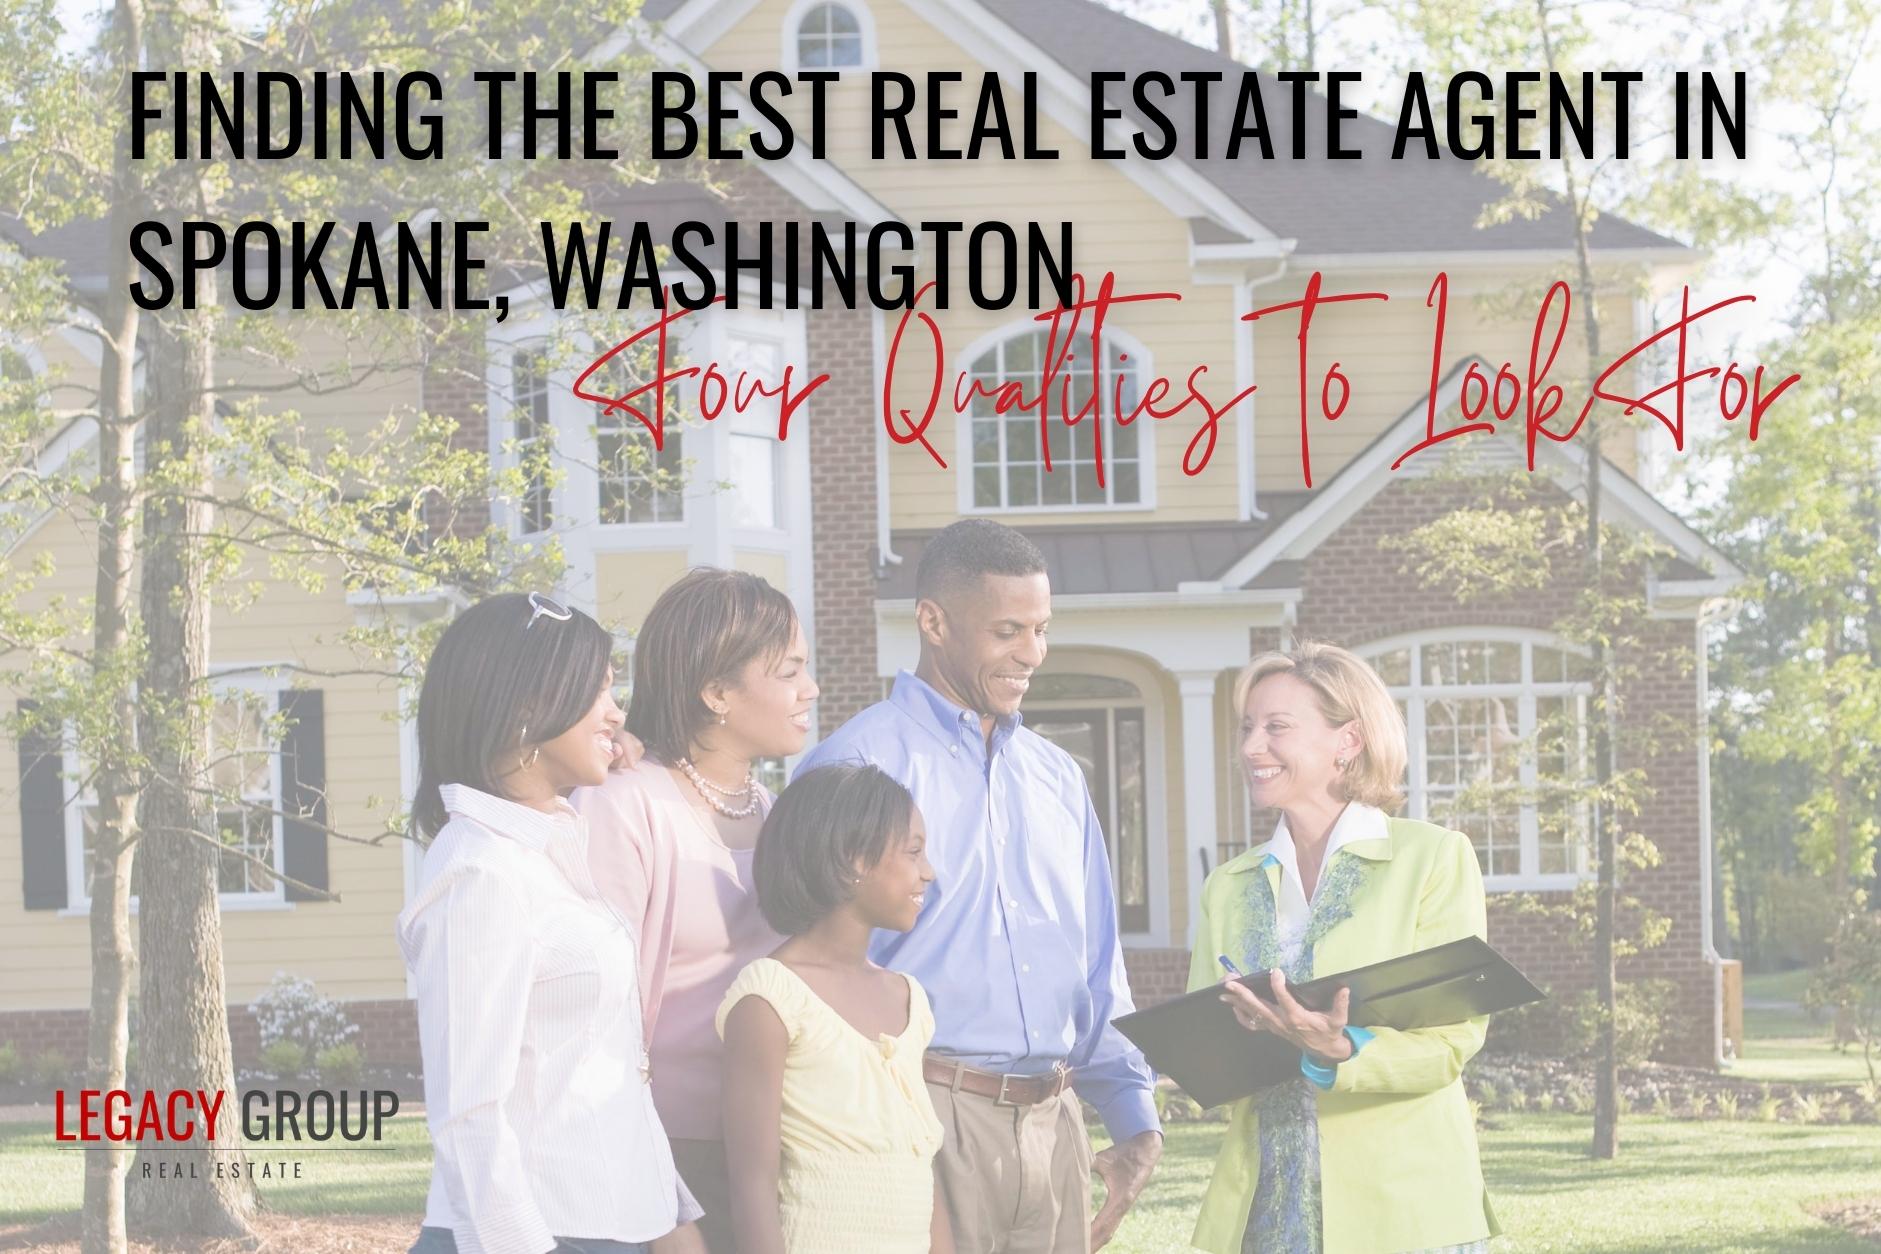 Finding the best real estate agent in spokane washington